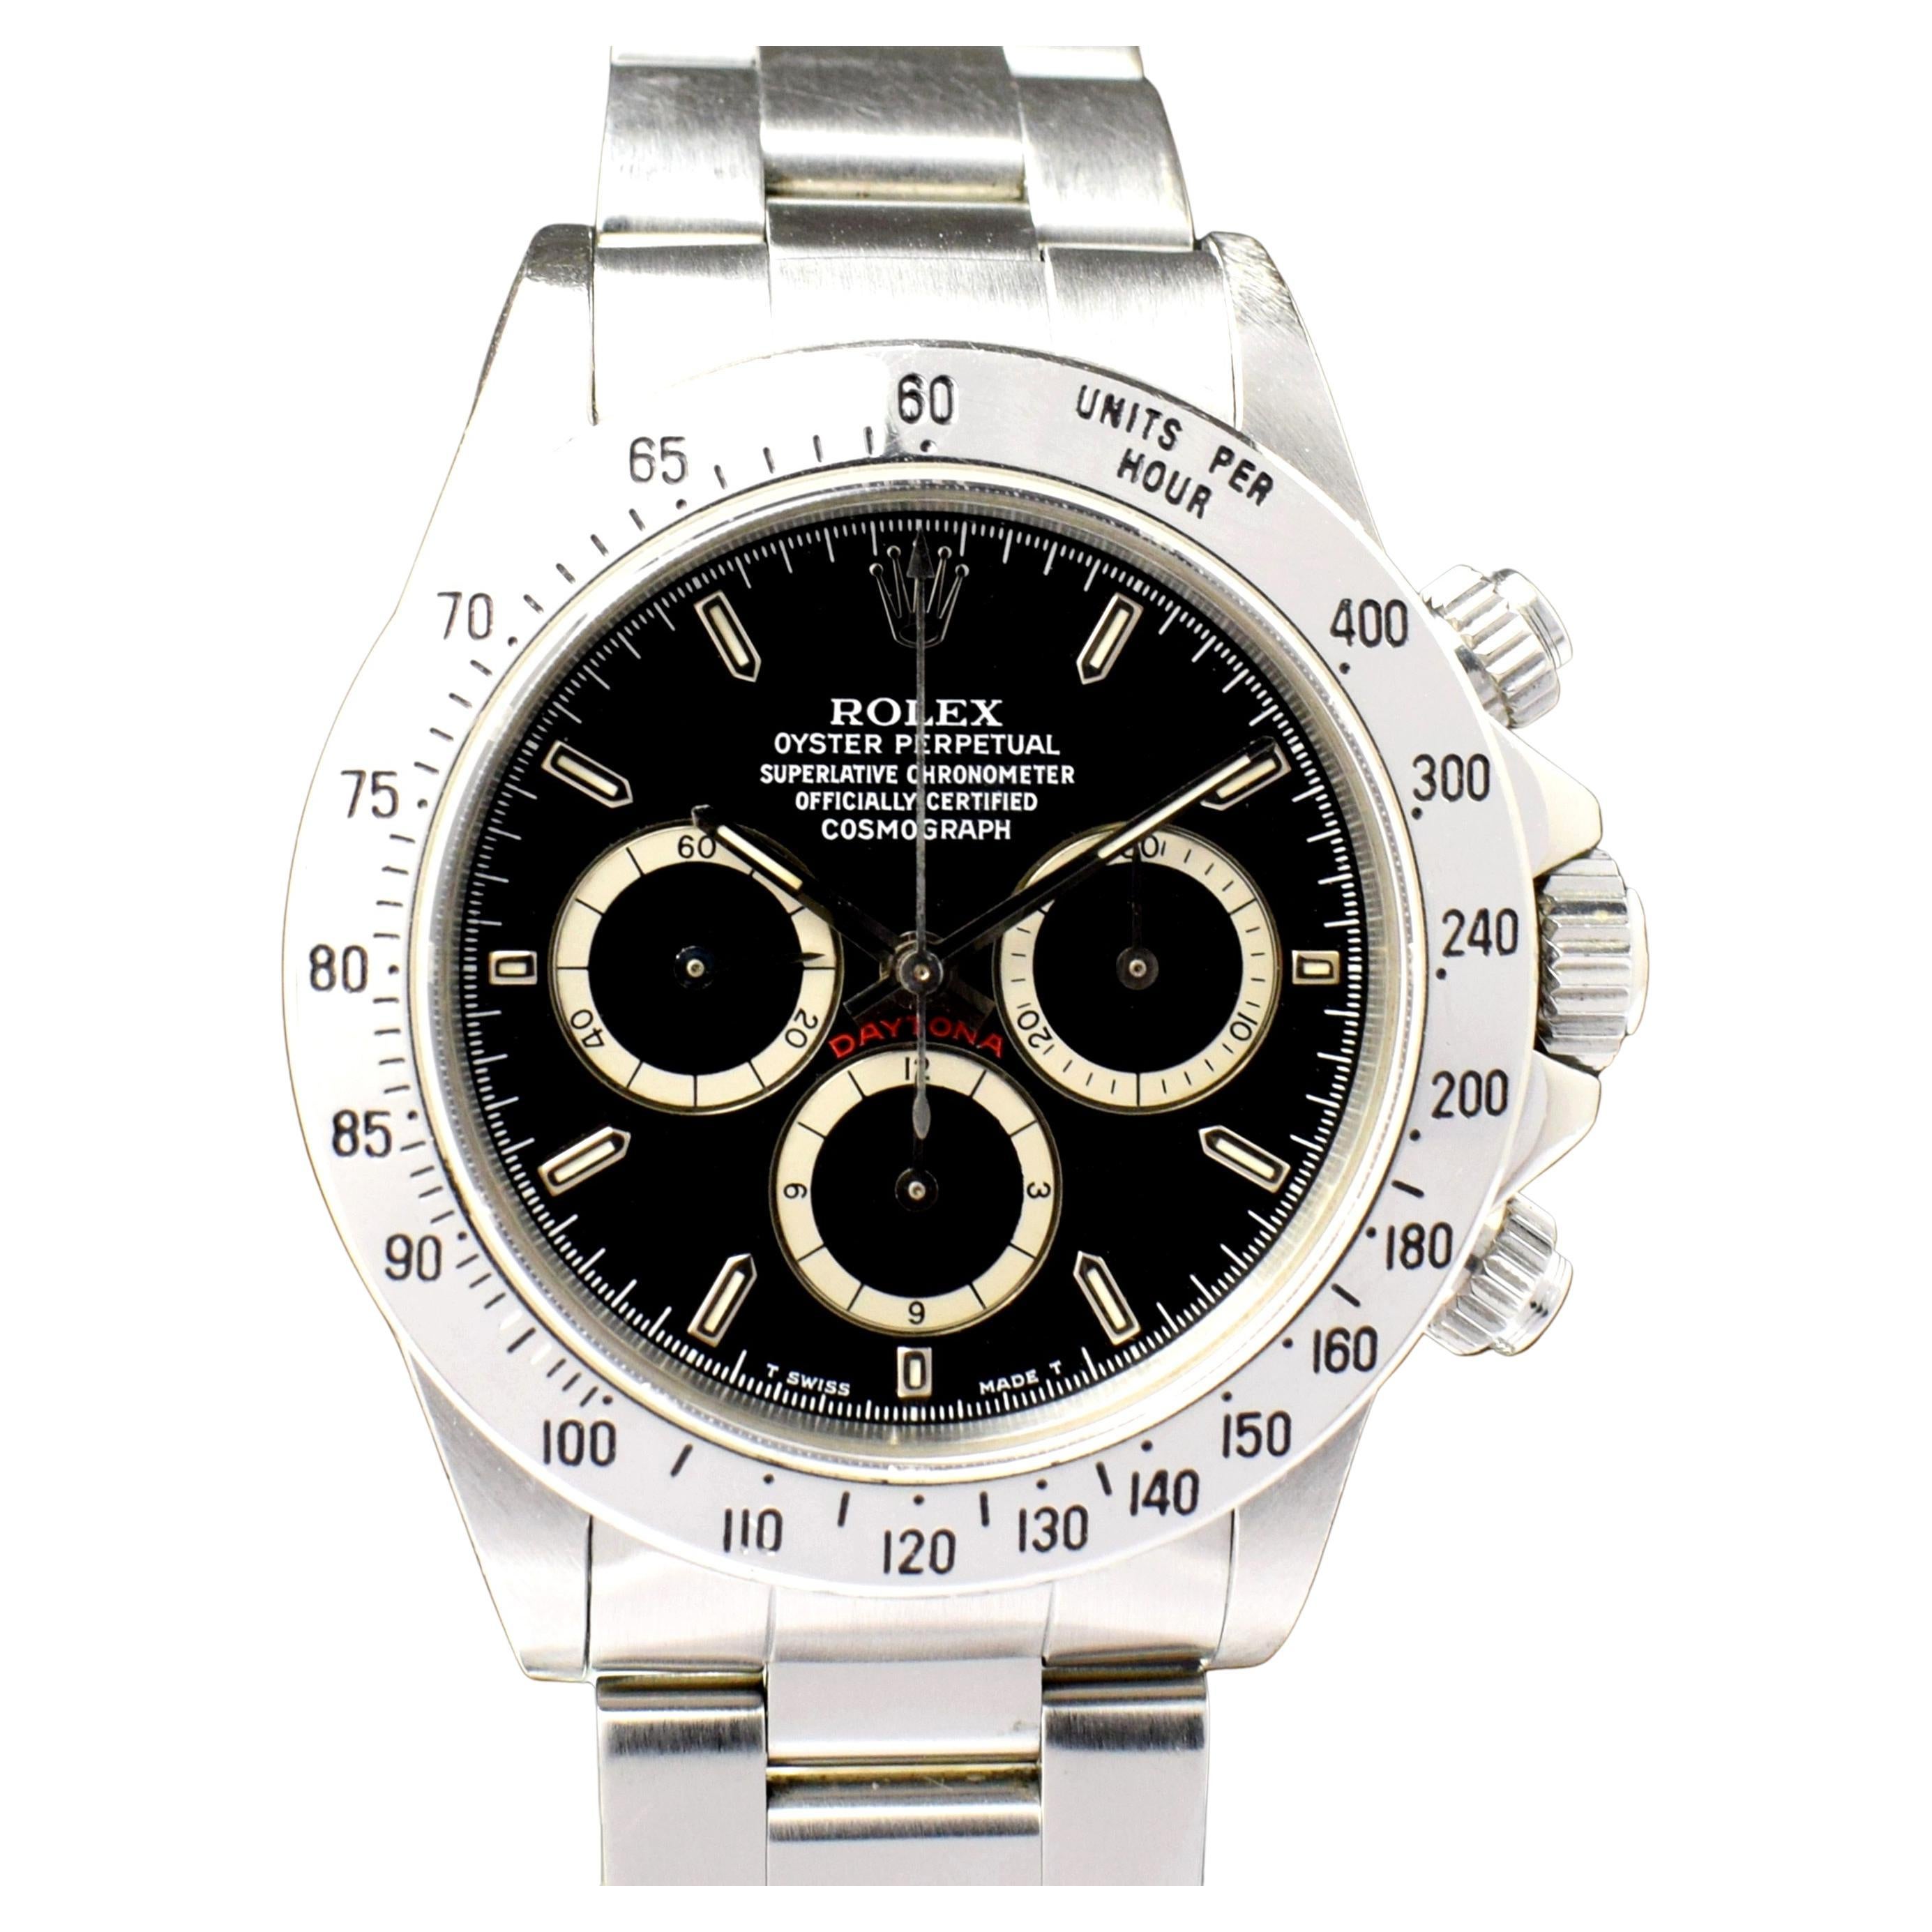 Cosmograph Daytona Watch